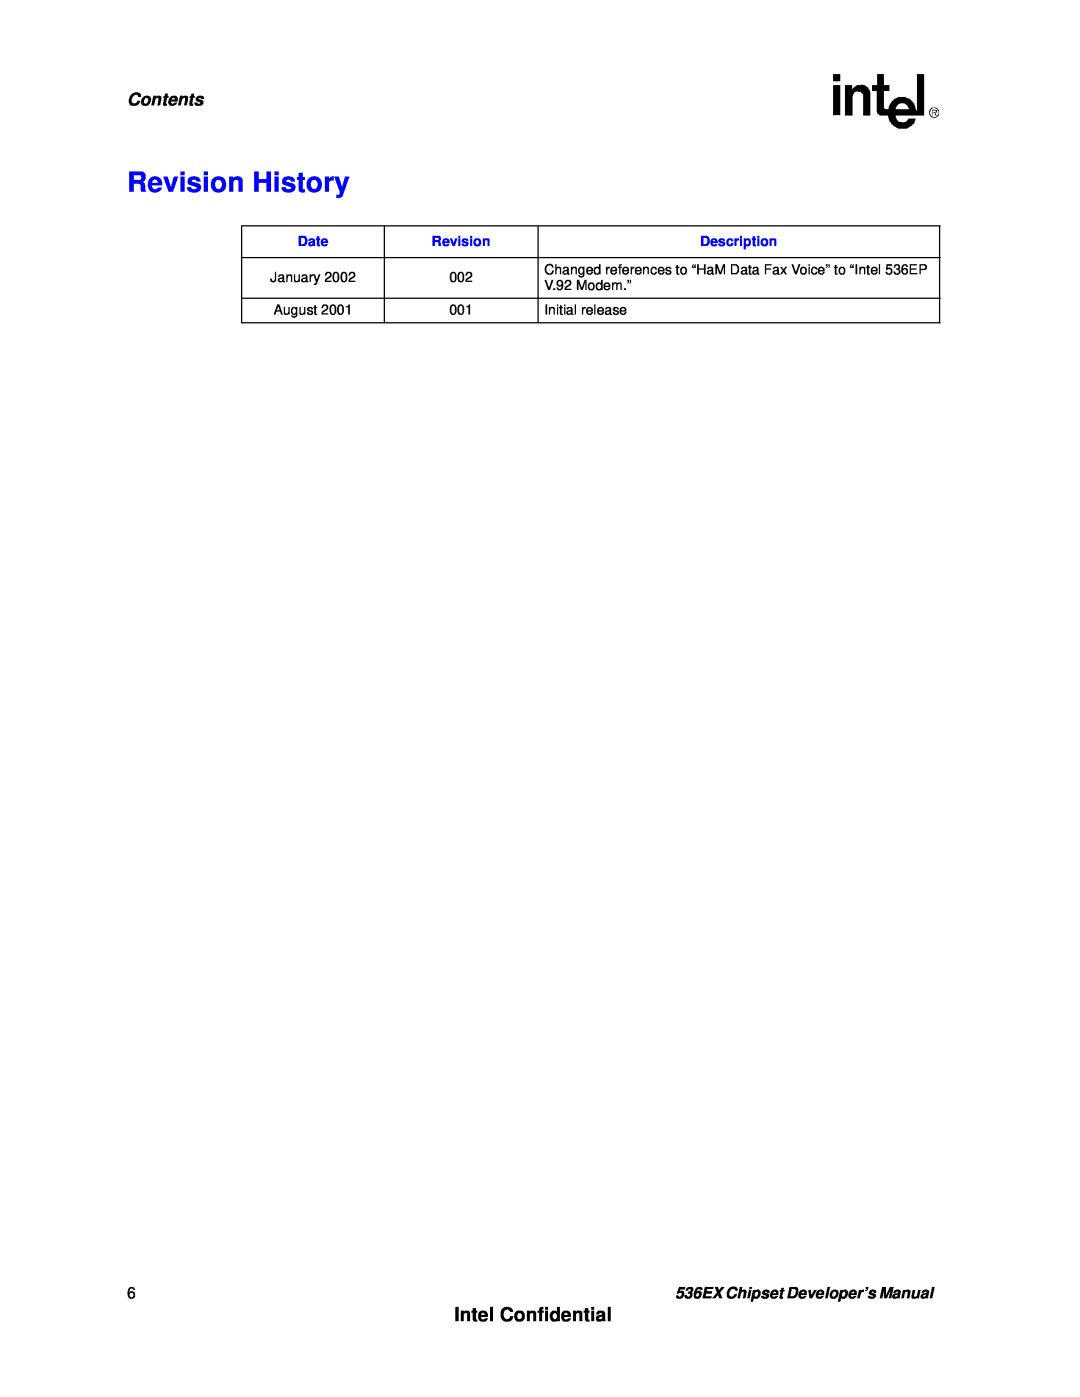 Intel 537EX manual Revision History, Intel Confidential, Contents, Date, Description, 536EX Chipset Developer’s Manual 